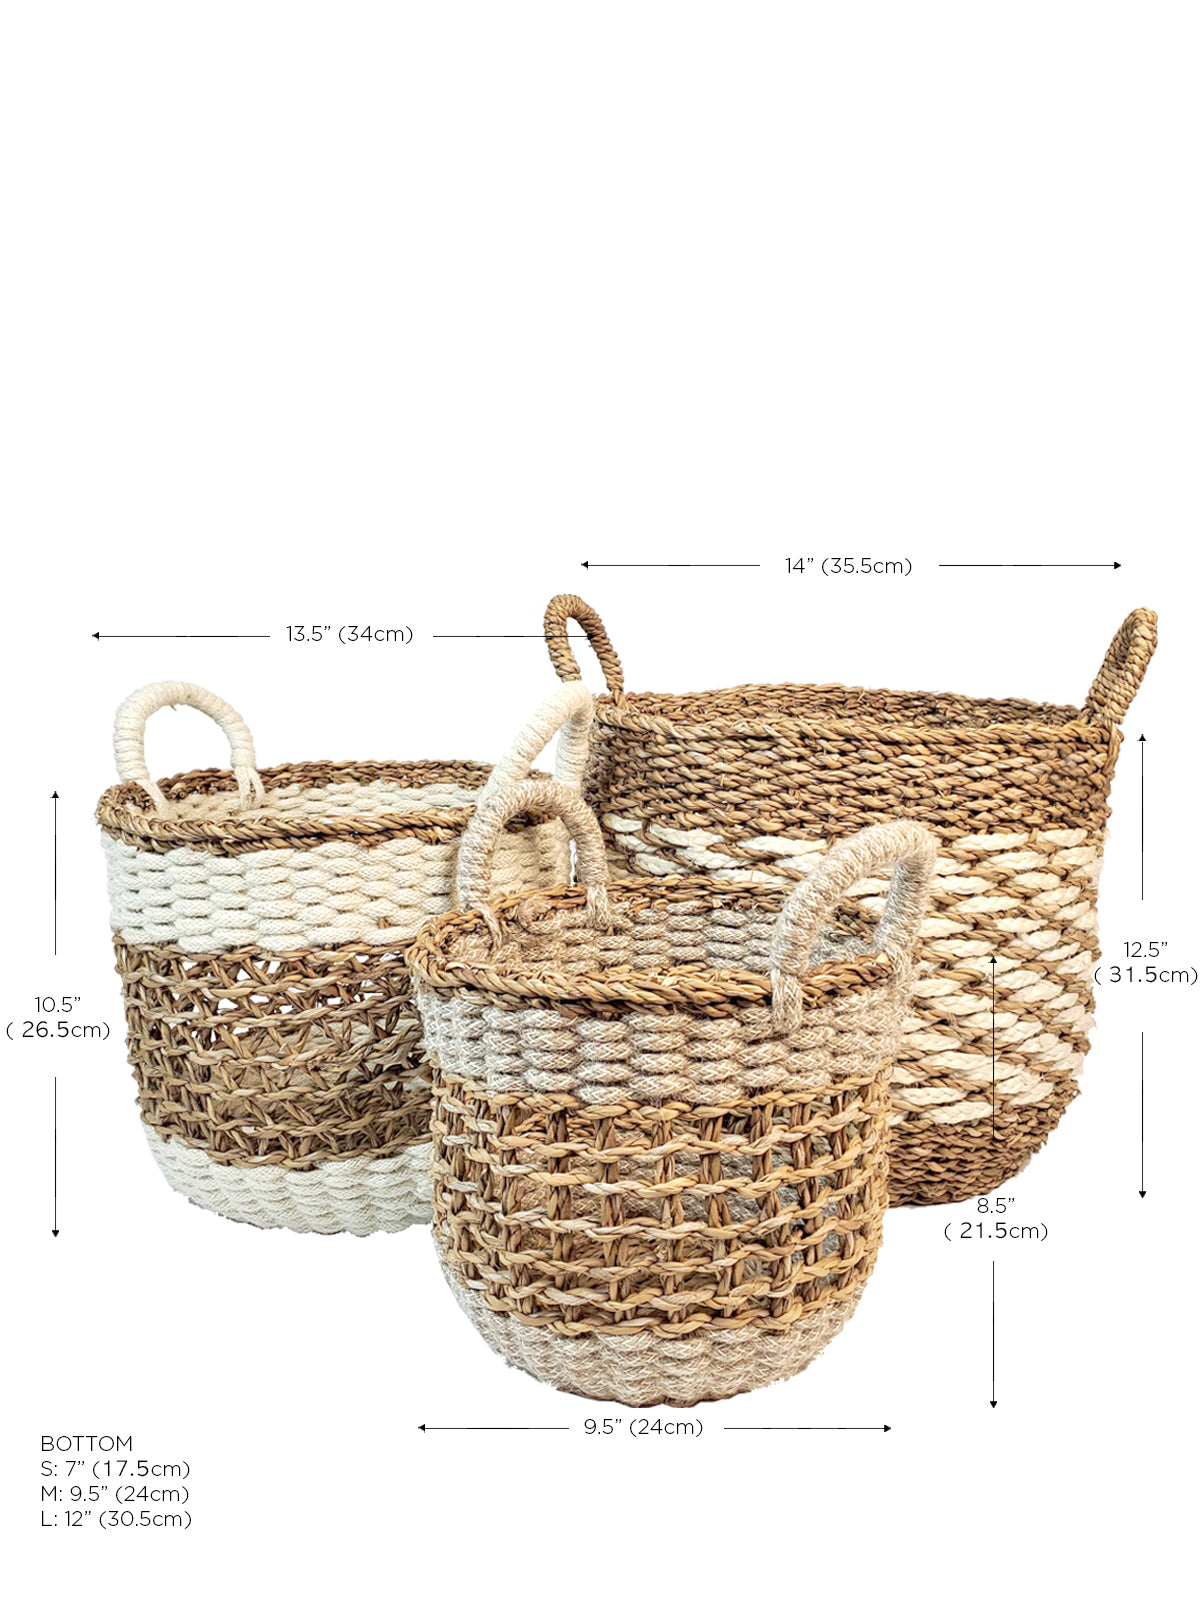  Ula Mesh Basket - Natural by KORISSA KORISSA Perfumarie